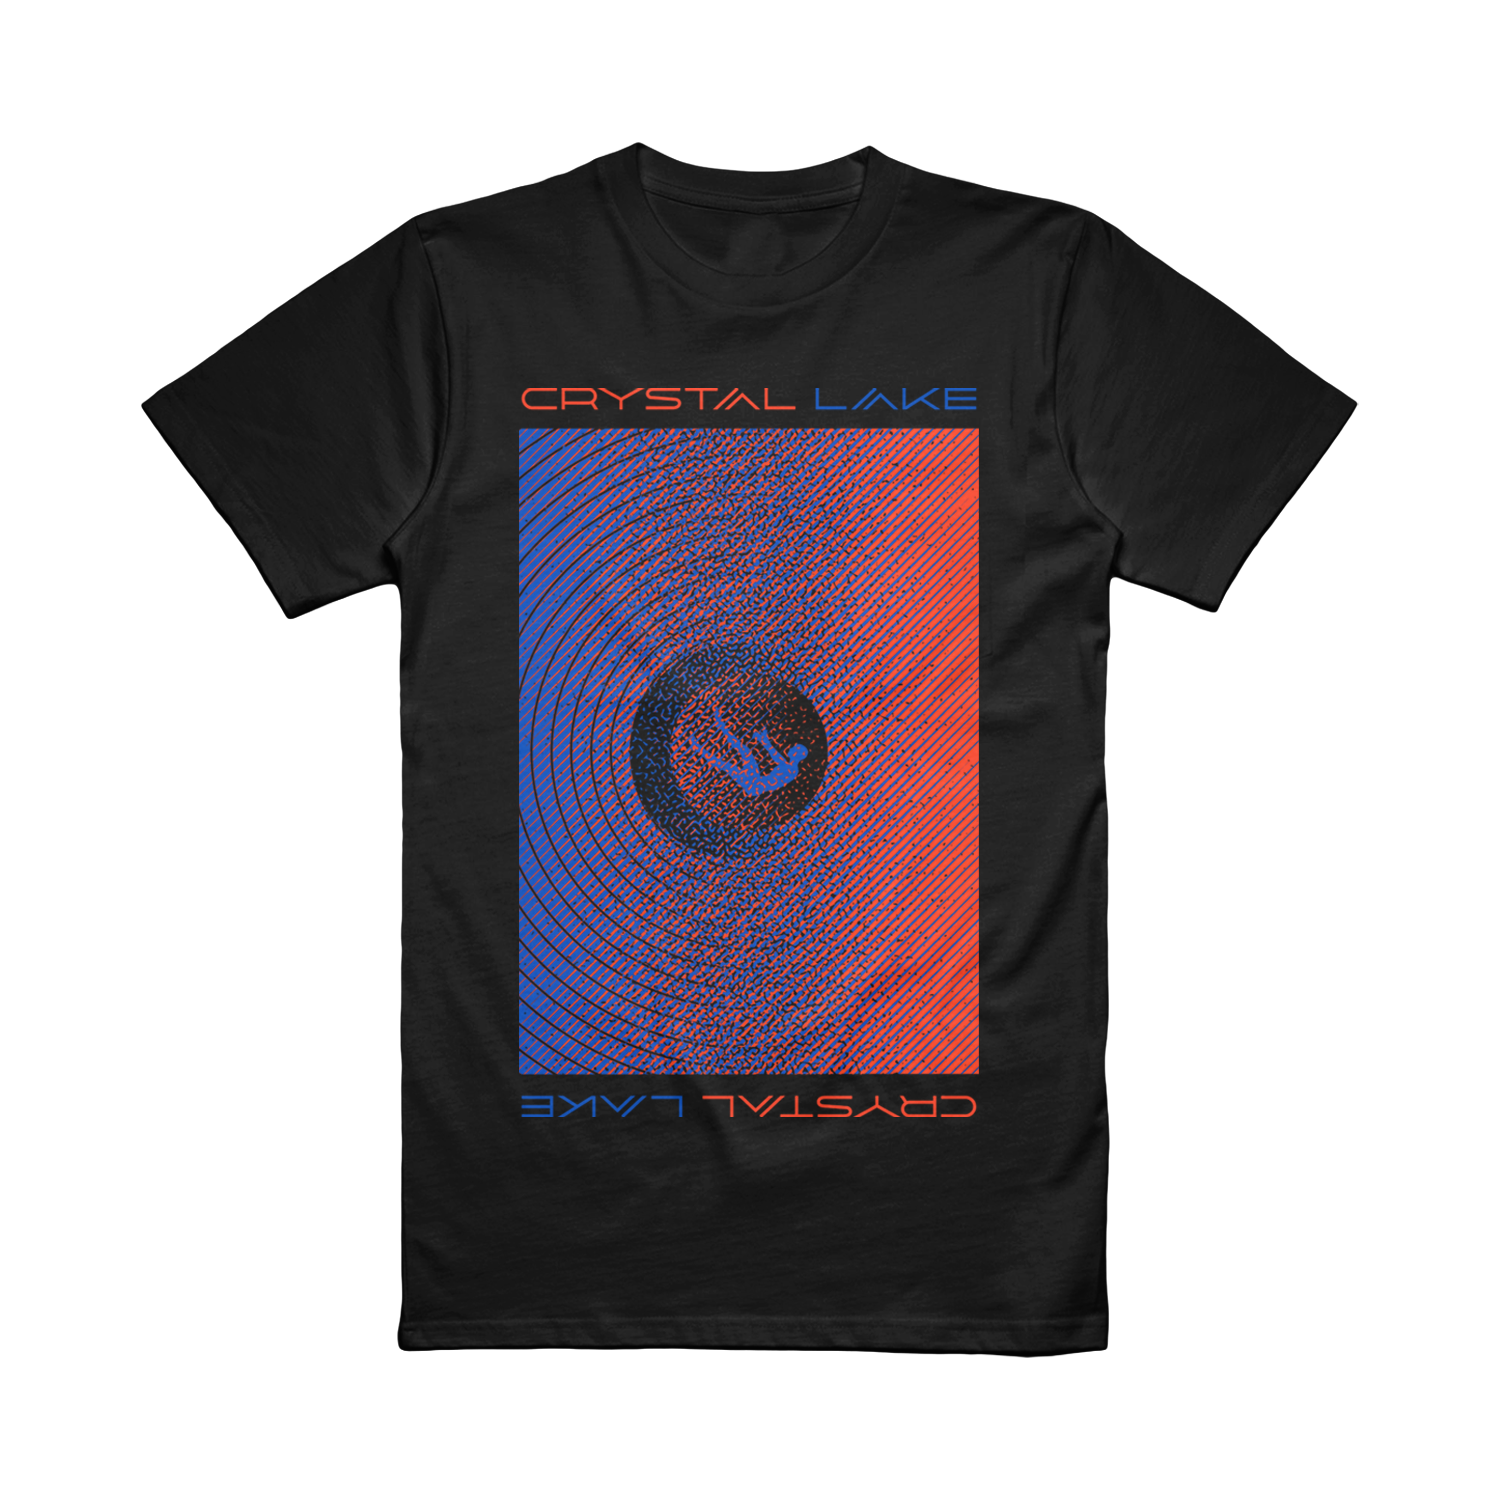 Crystal Lake - Digital Spiral Tee